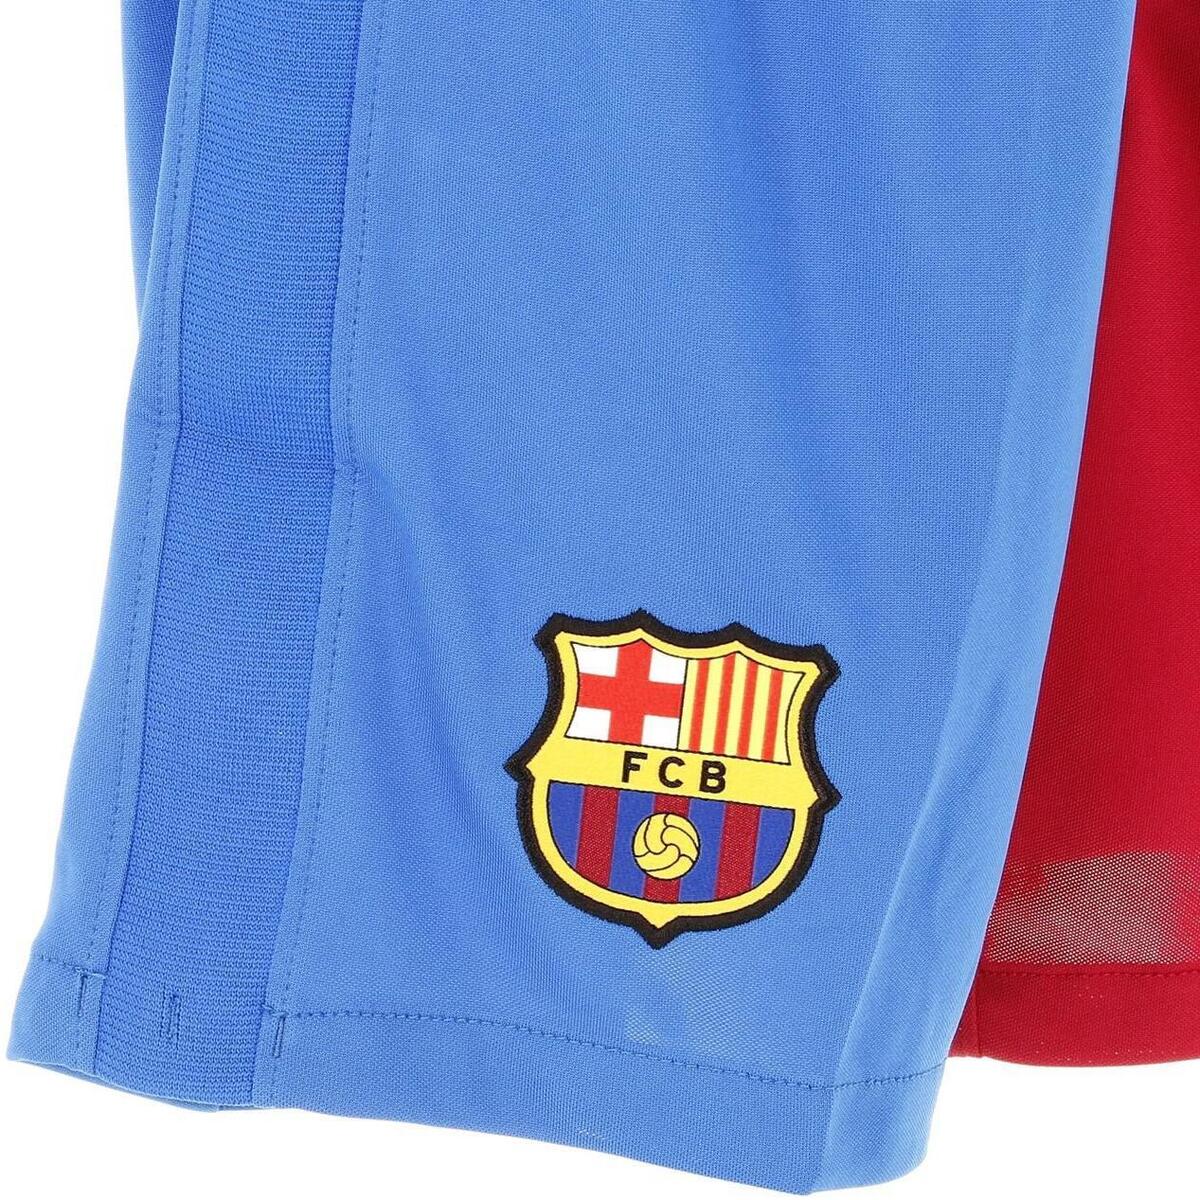 Nike Bordeaux Barca short jr 2021.22 home 50Kpg2pW